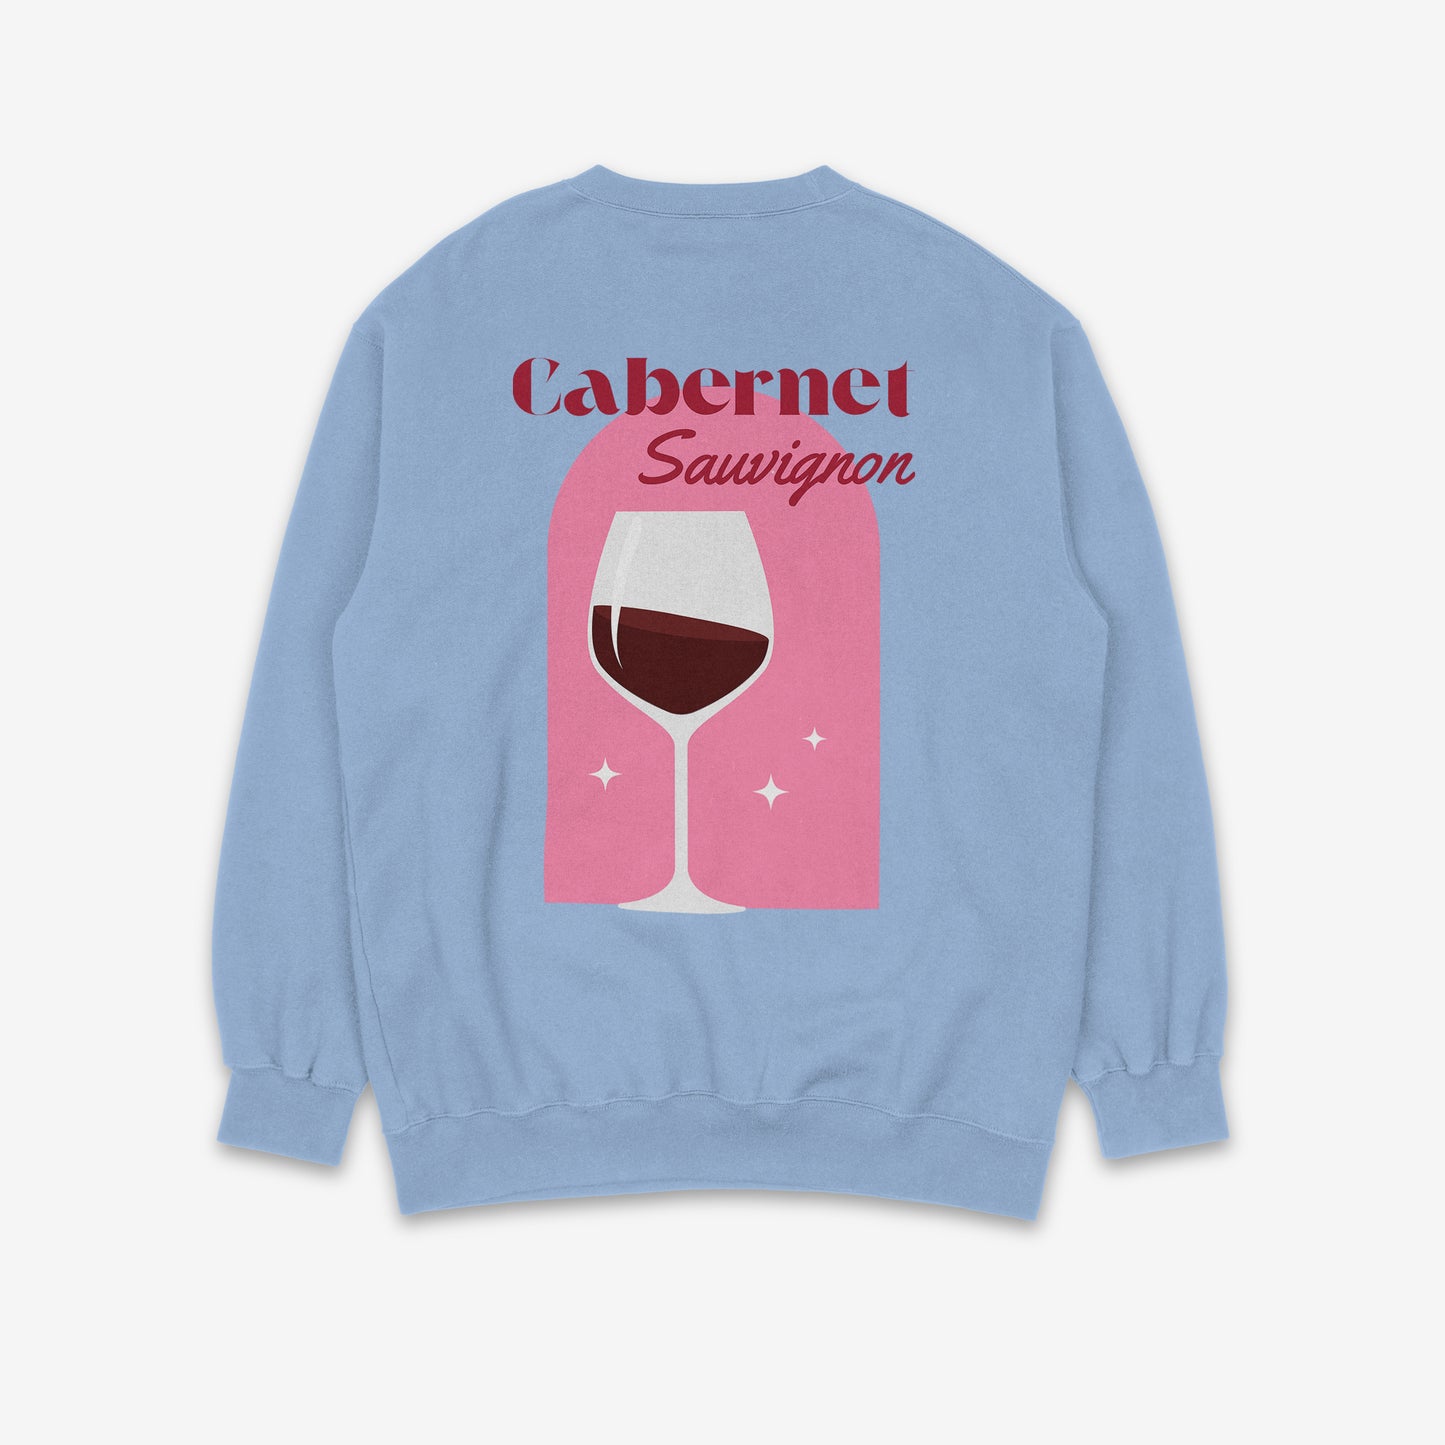 Cabernet Sauvignon Sweatshirt